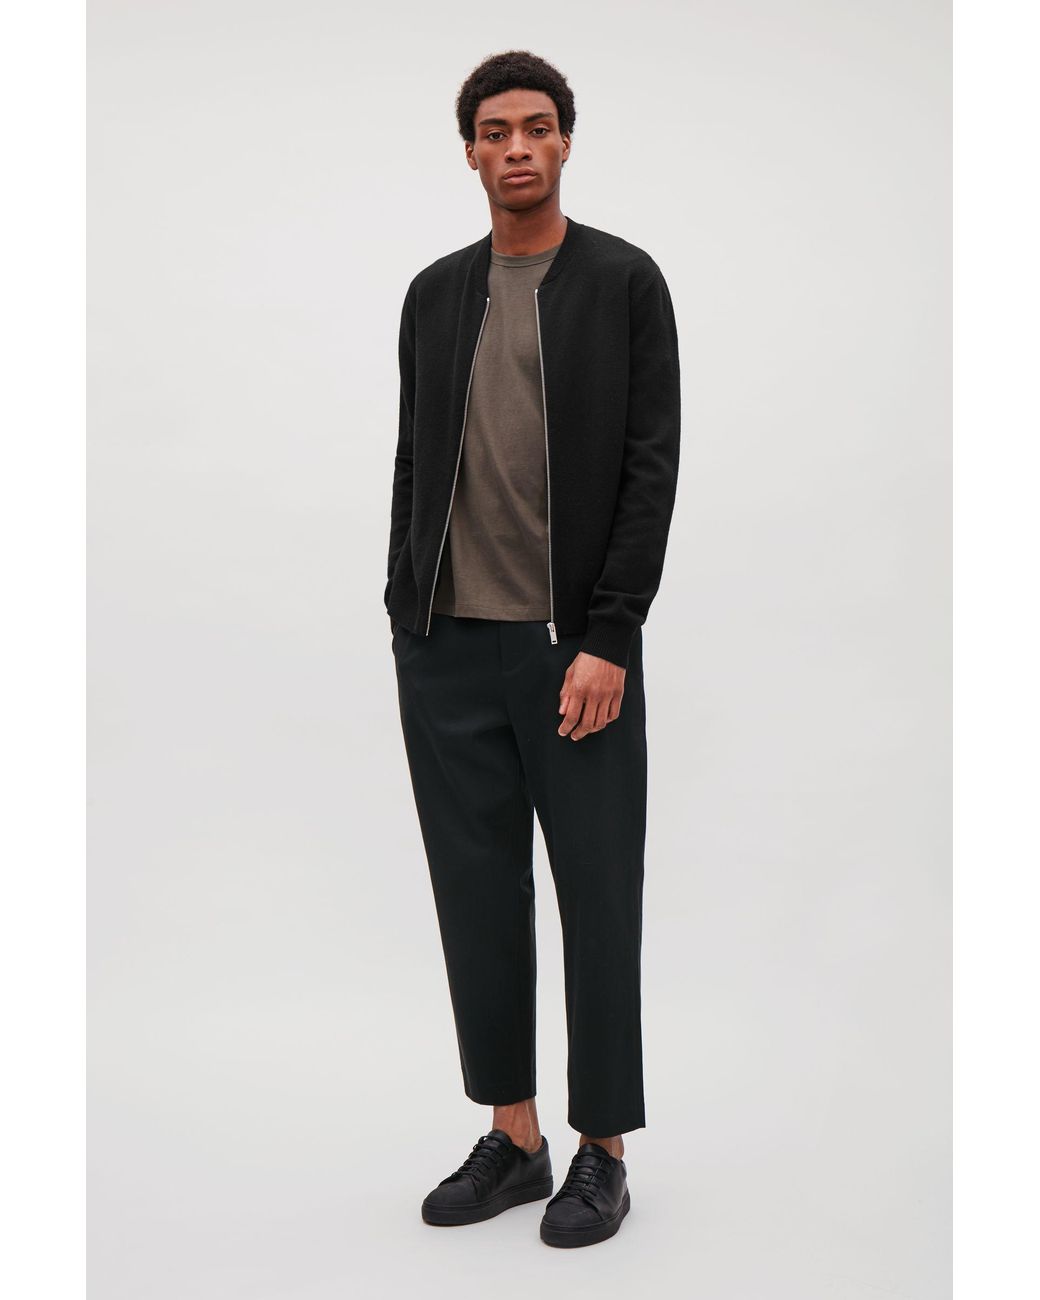 COS Wool Zip-up Cardigan in Black for Men | Lyst